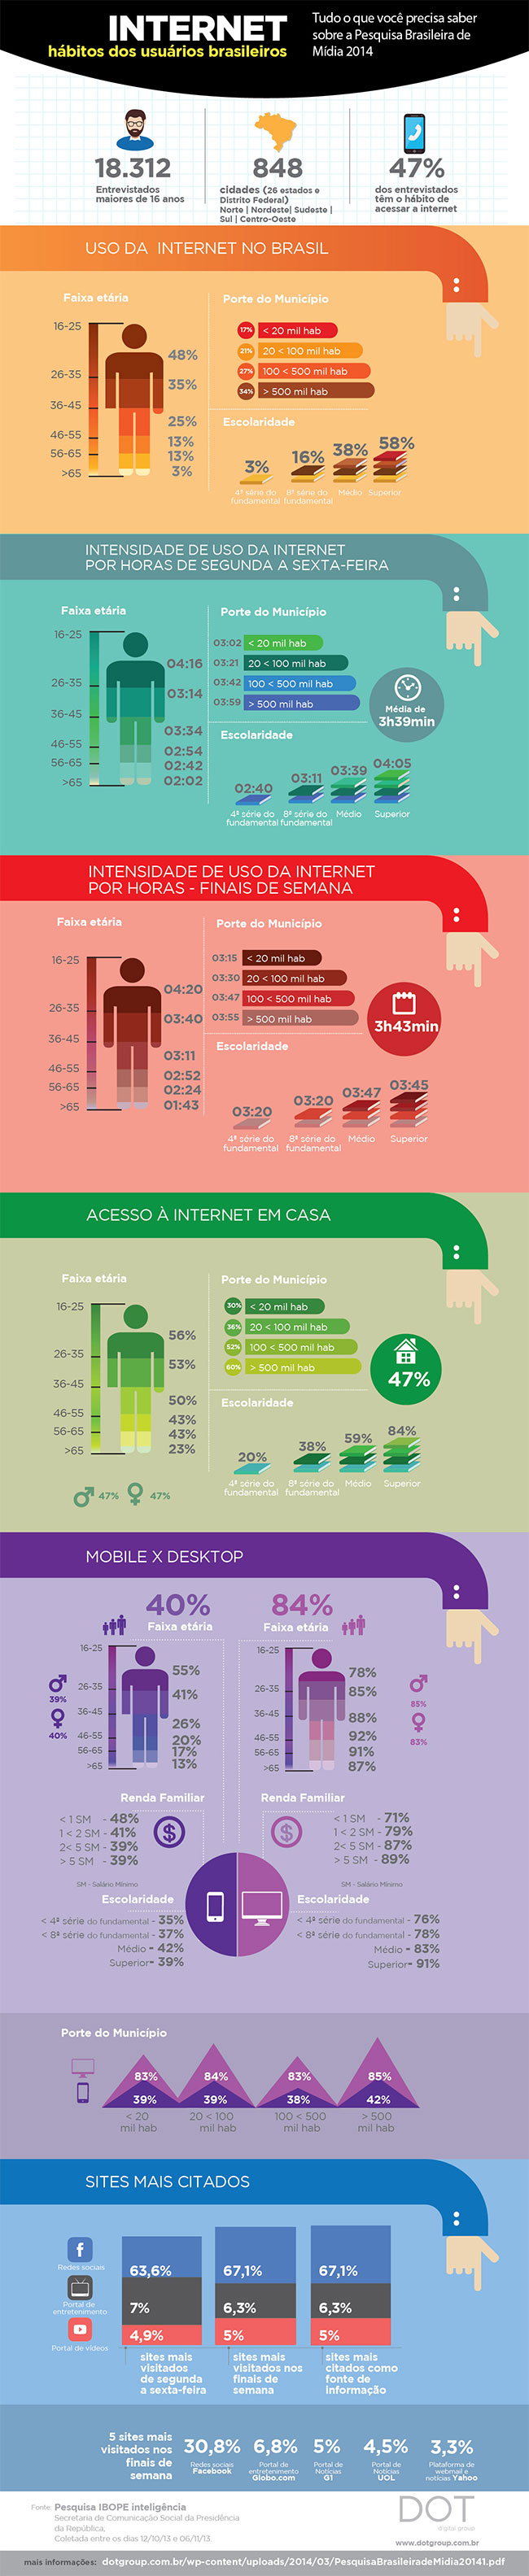 Infográfico hábitos do brasileiro na internet